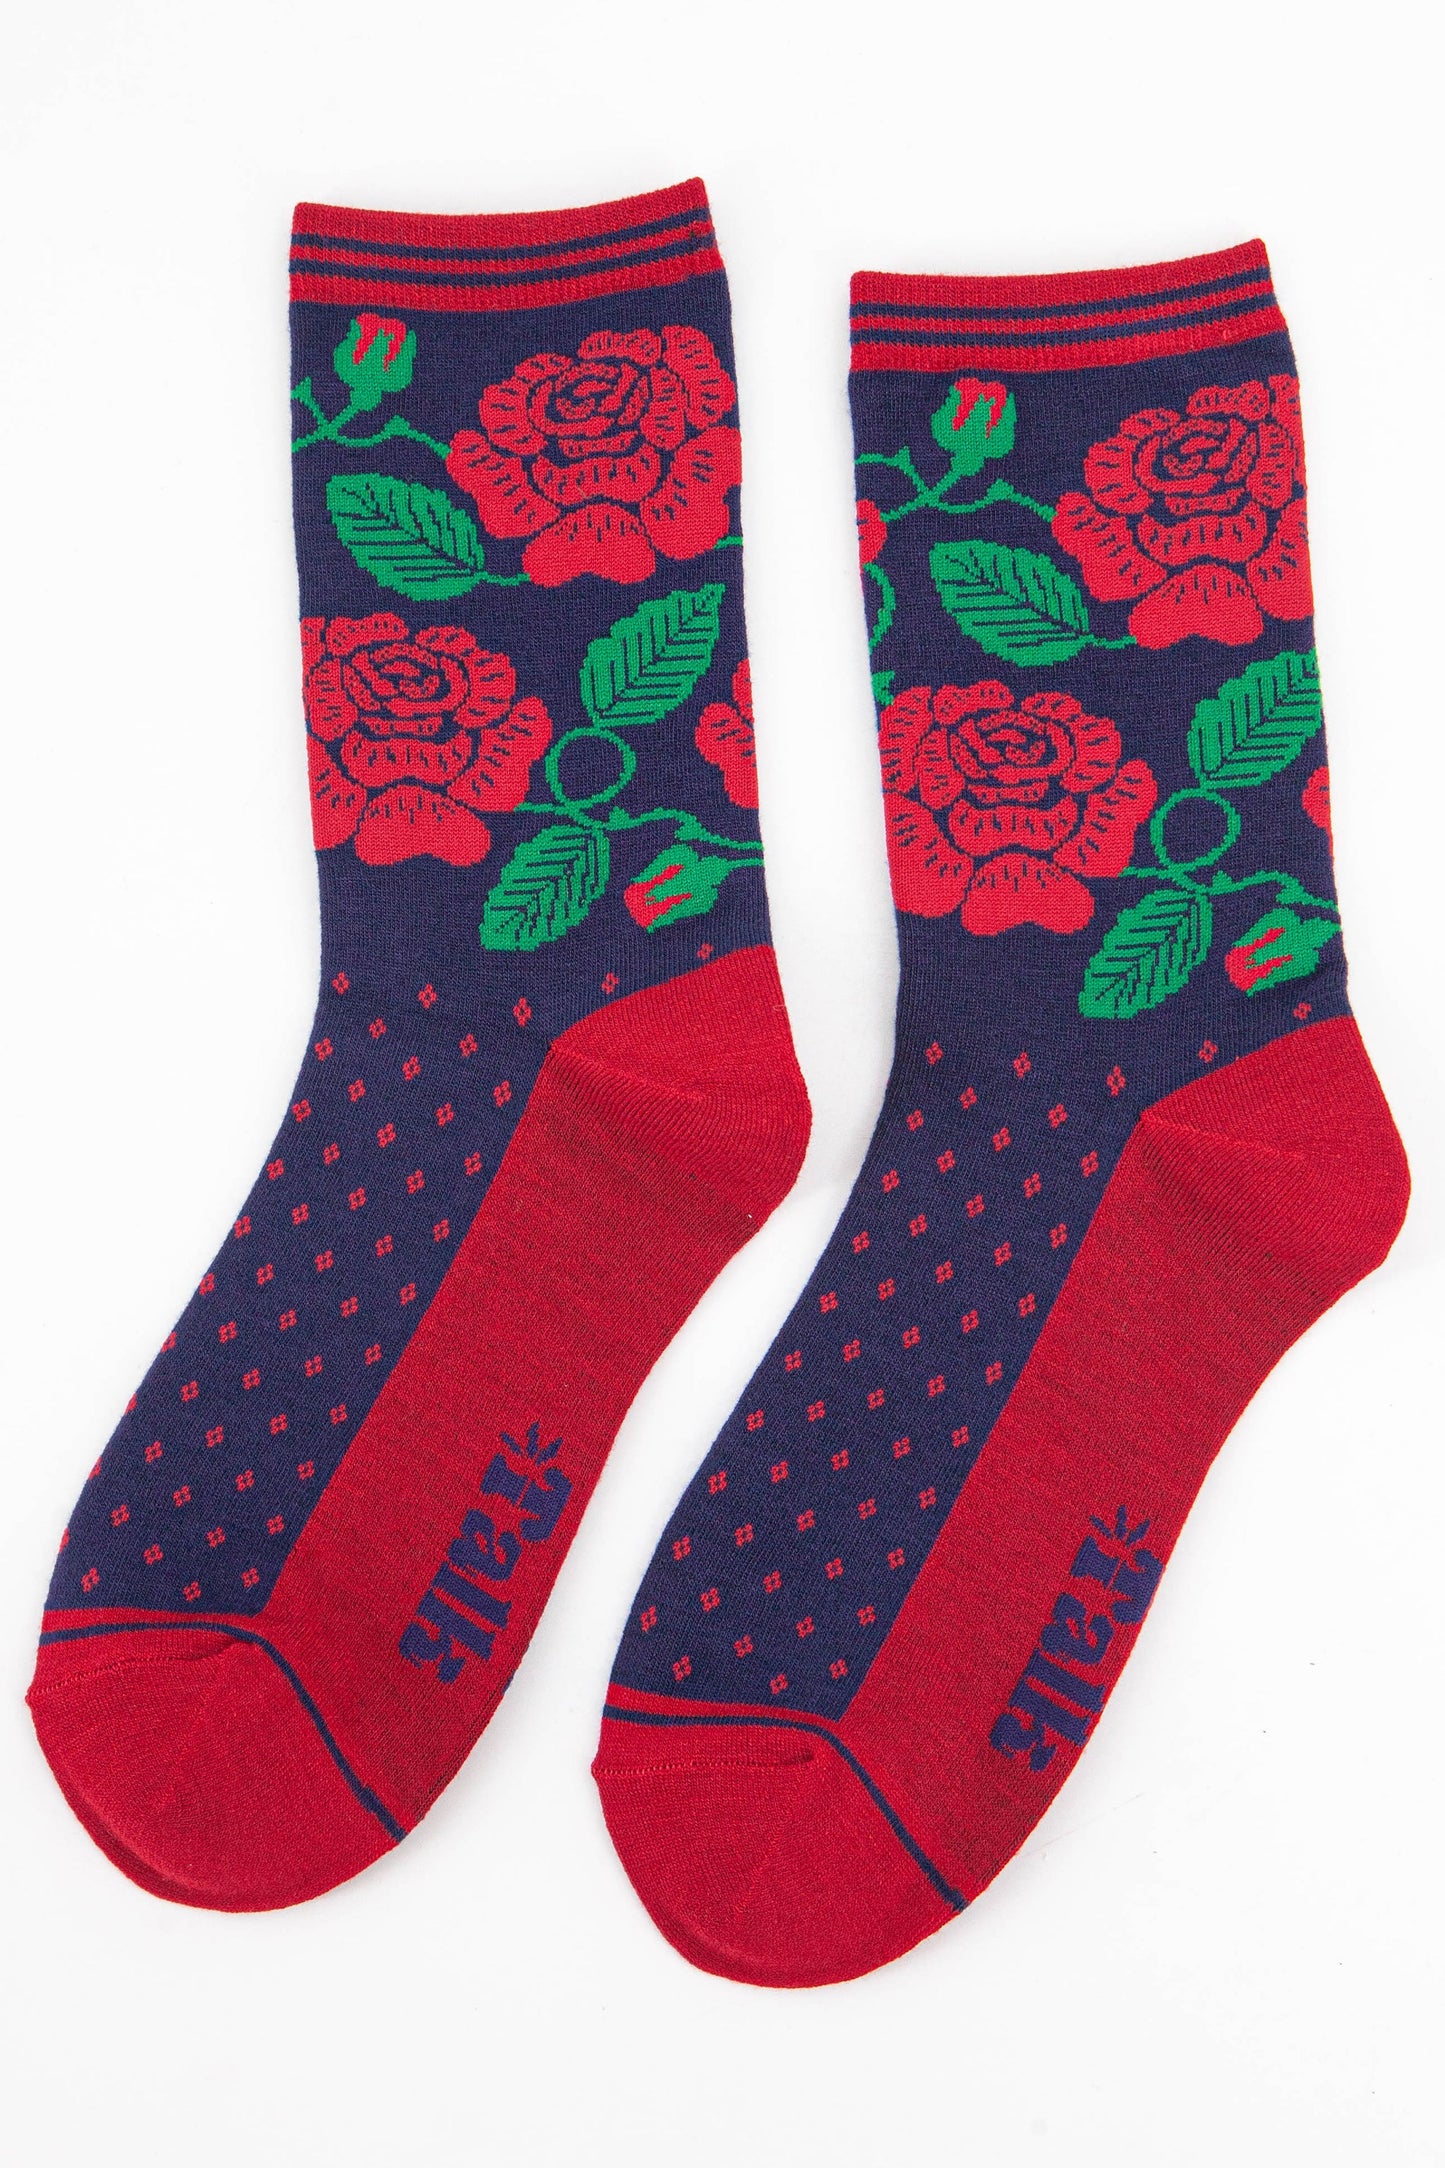 red rose floral ankle socks for women